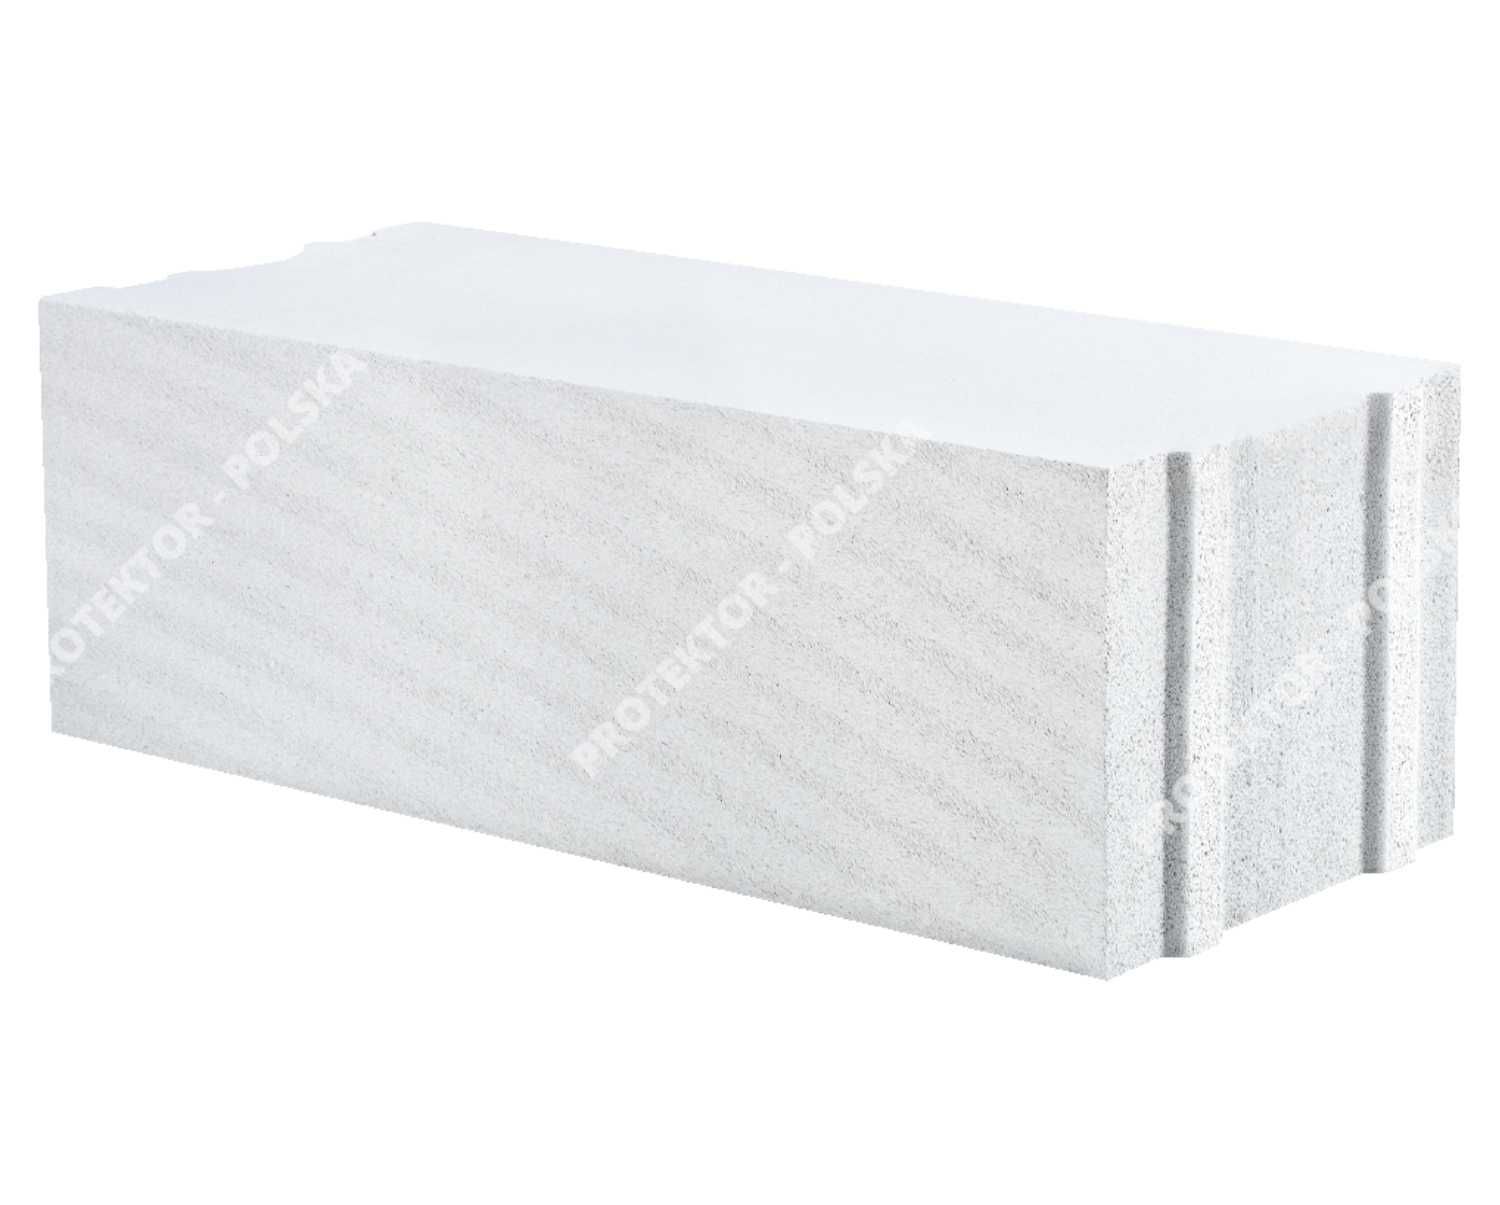 bloczek YTONG beton komórkowy pustak biały gazobeton xella cegła domek